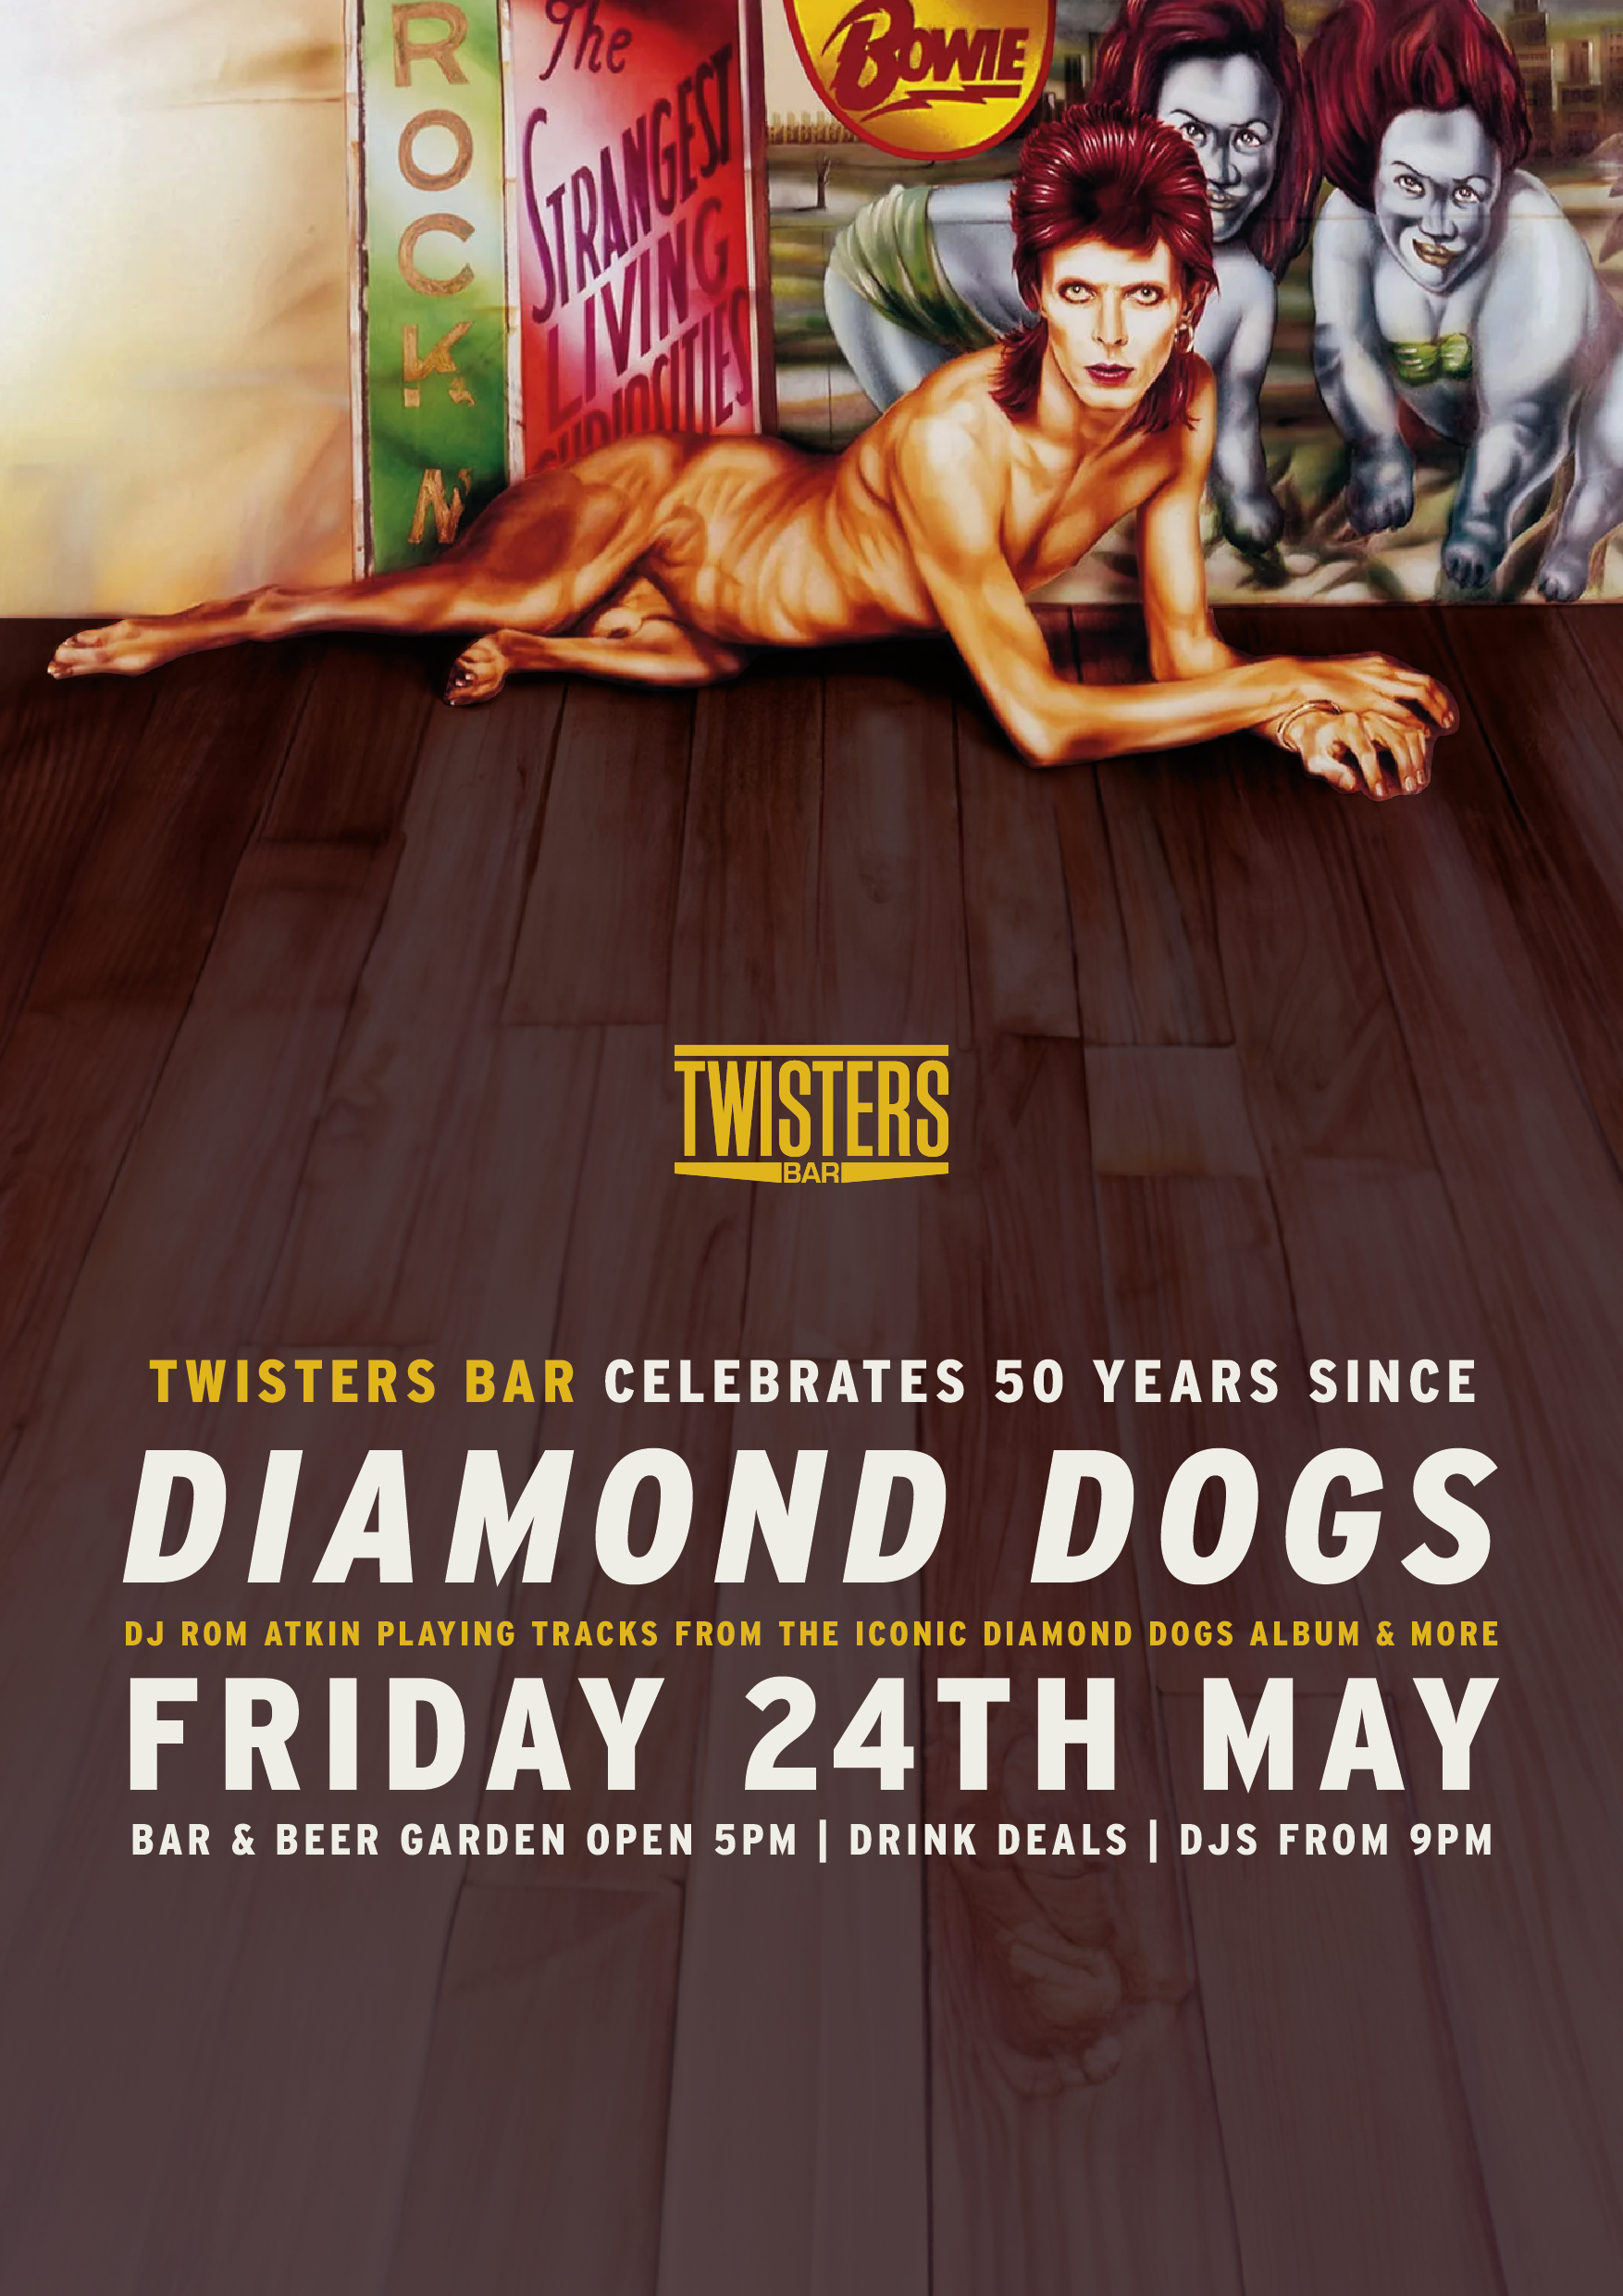 Twisters celebrates 50 years since Diamond Dogs